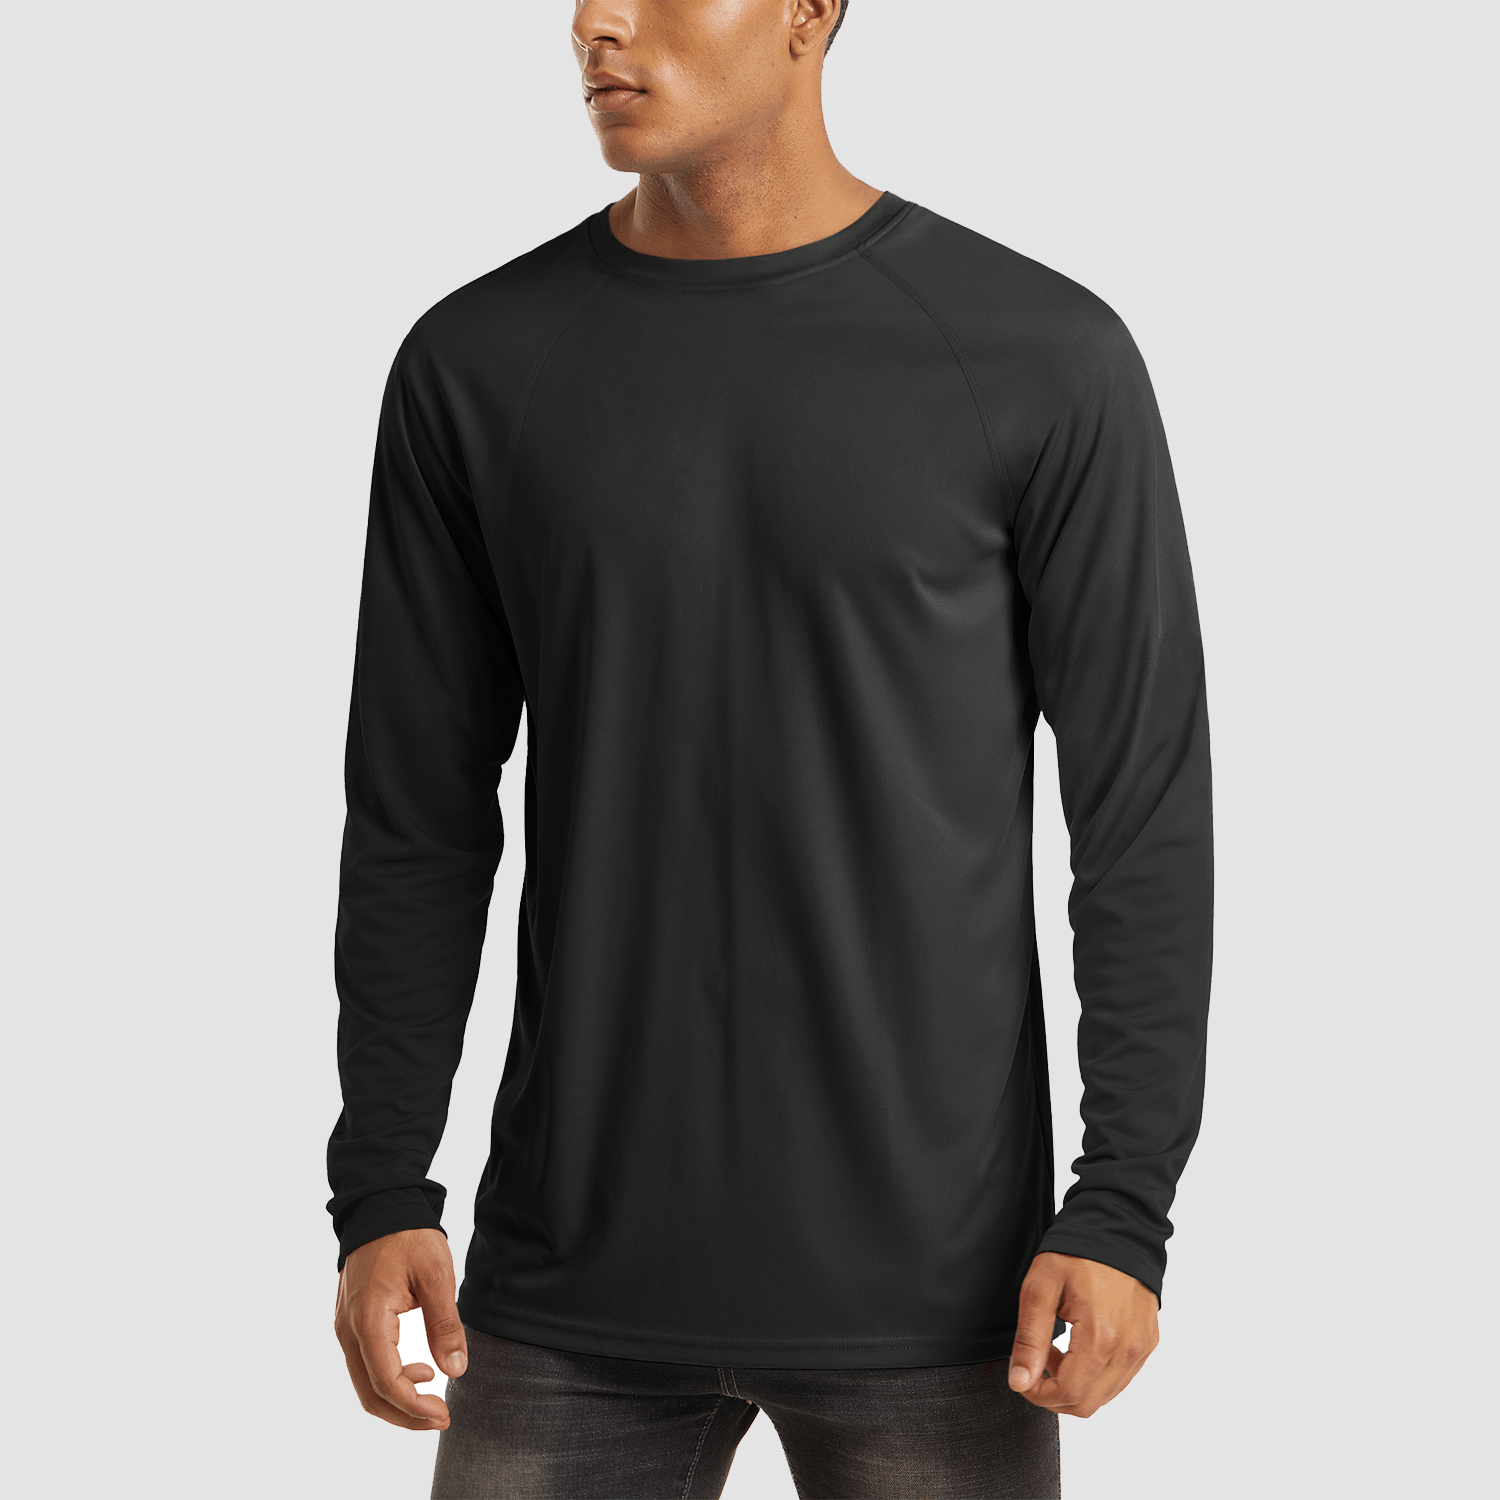 【Buy 4 Get 4th Free】Men's Long Sleeve Hooded Shirt UPF 50+ Athletic Shirt, Black / S